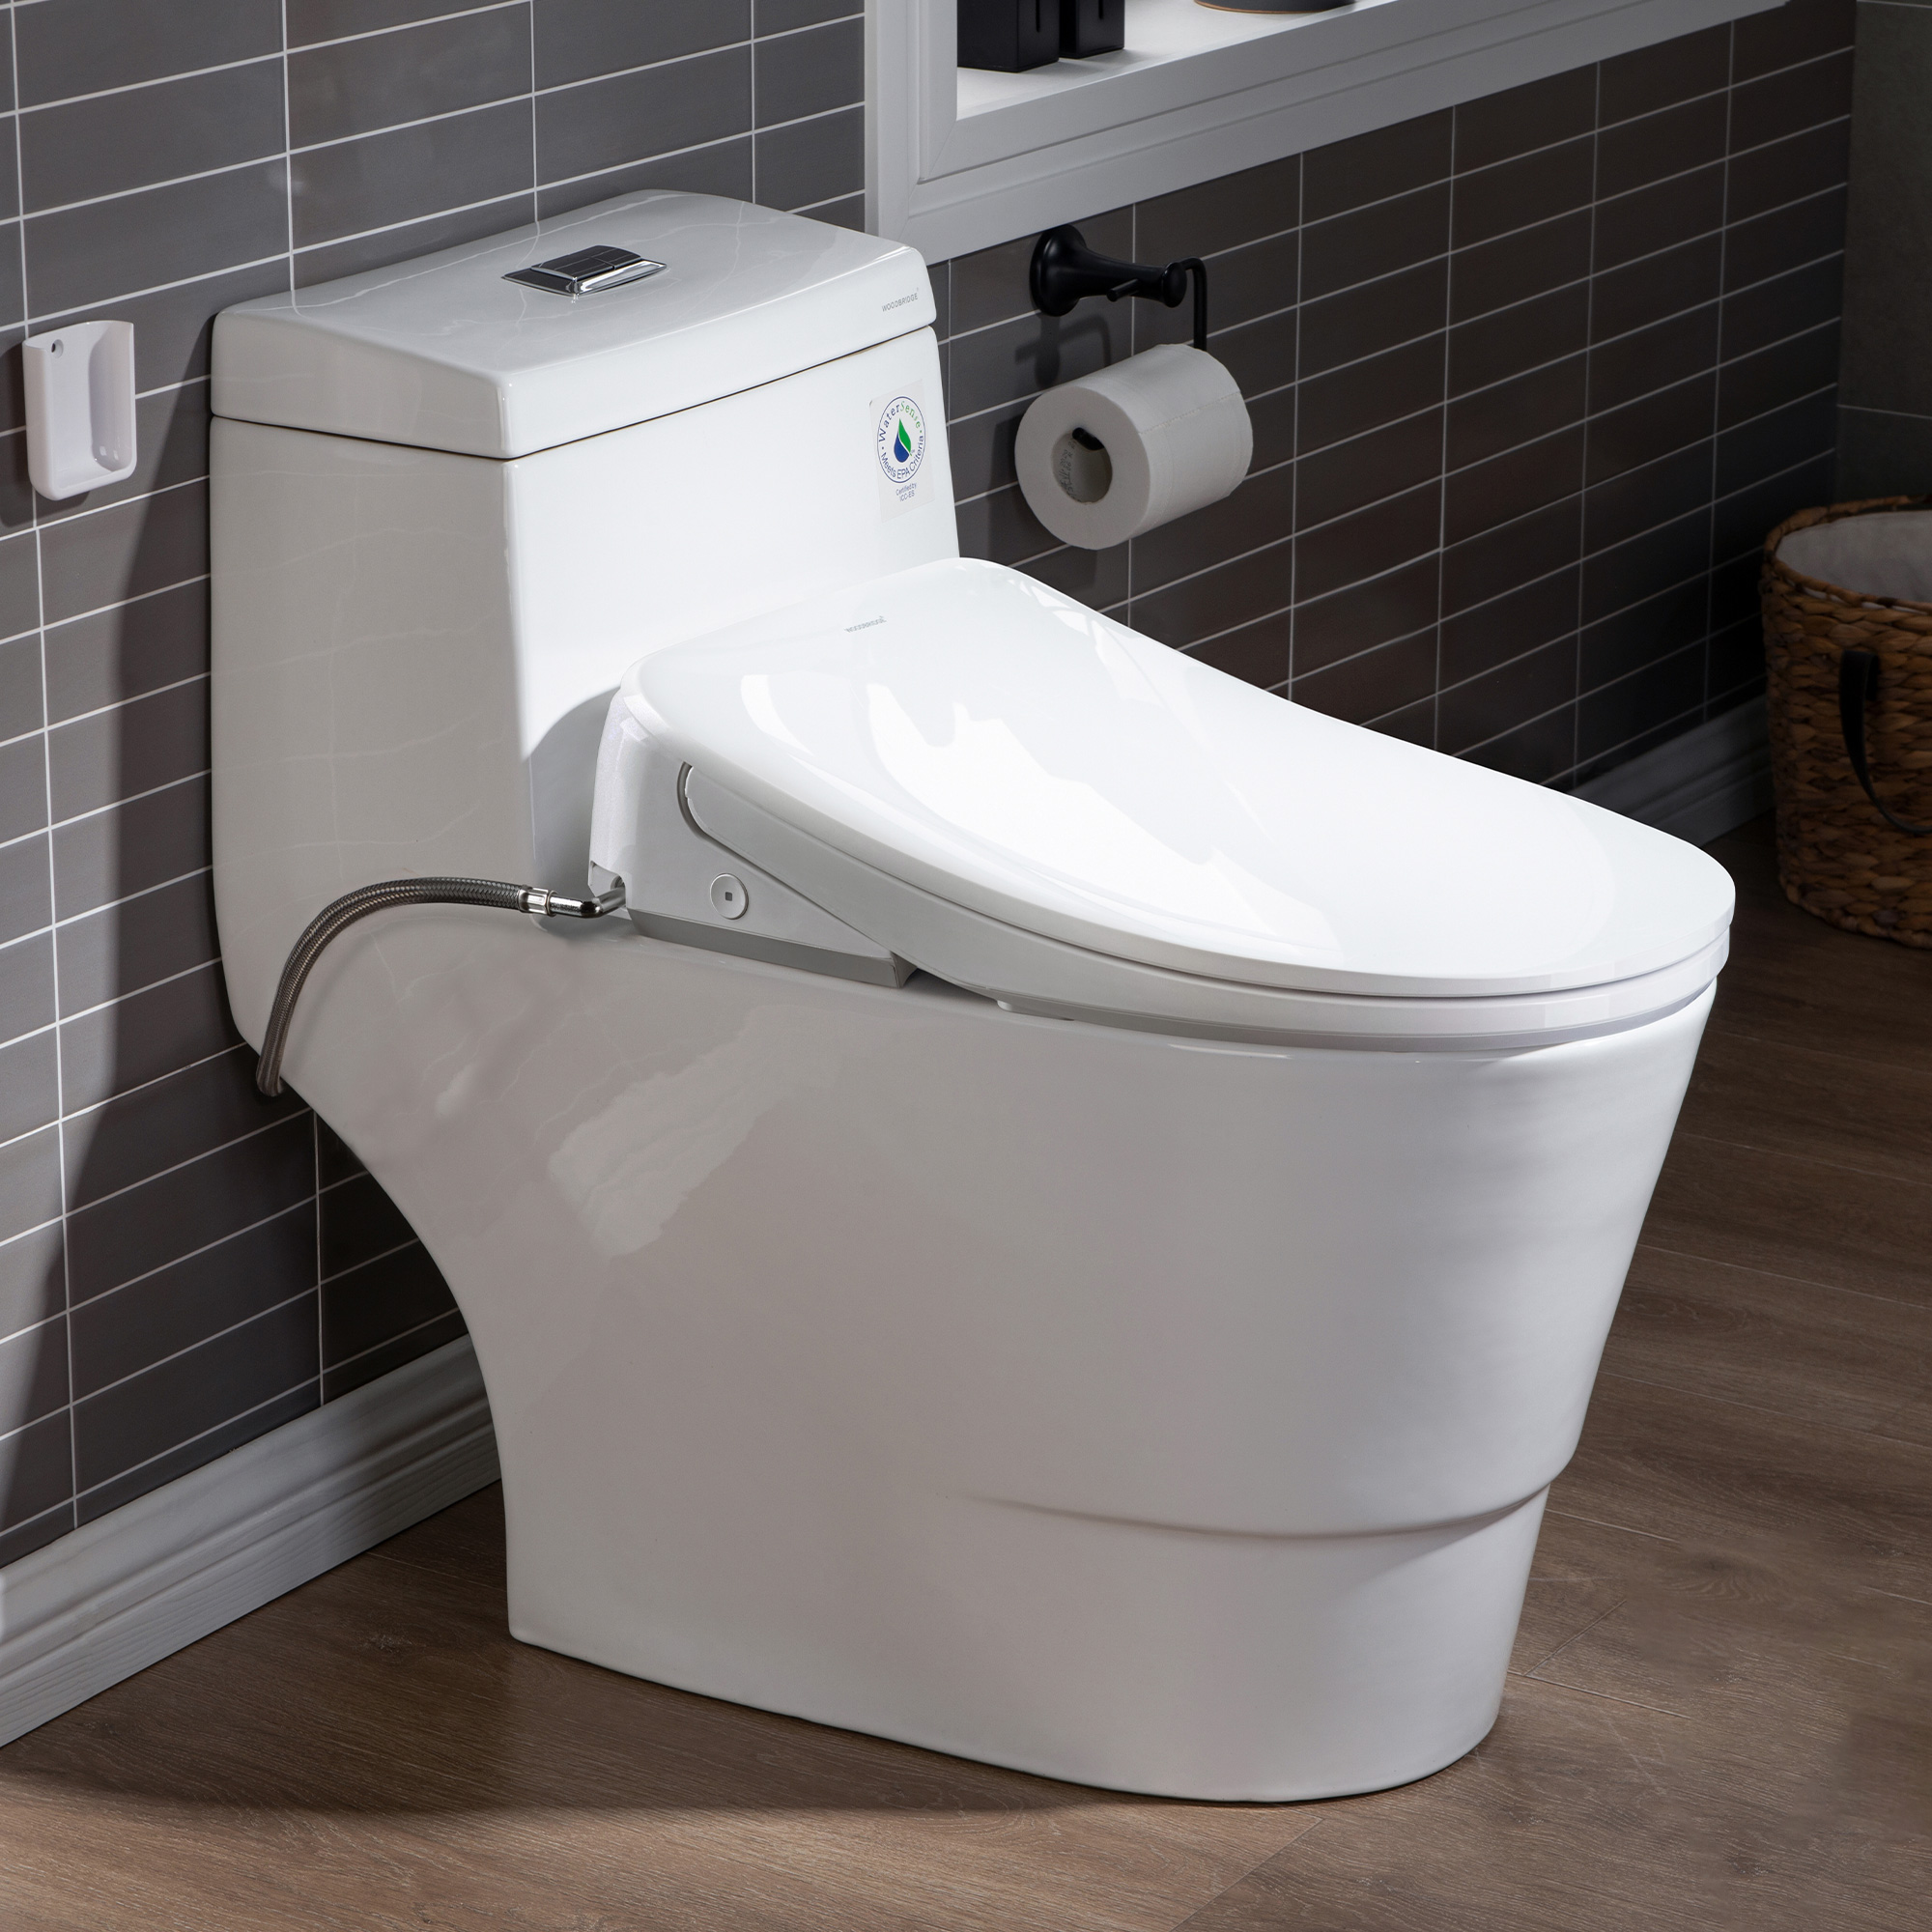  WOODBRIDGE Elongated 1-Piece Toilet with Advanced Auto Open & Close Bidet Smart Toilet Seat, Child Wash, Chair Height, 1000 Gram MaP Flushing Score, 1.28 GPF Dual, Water Sensed_15285